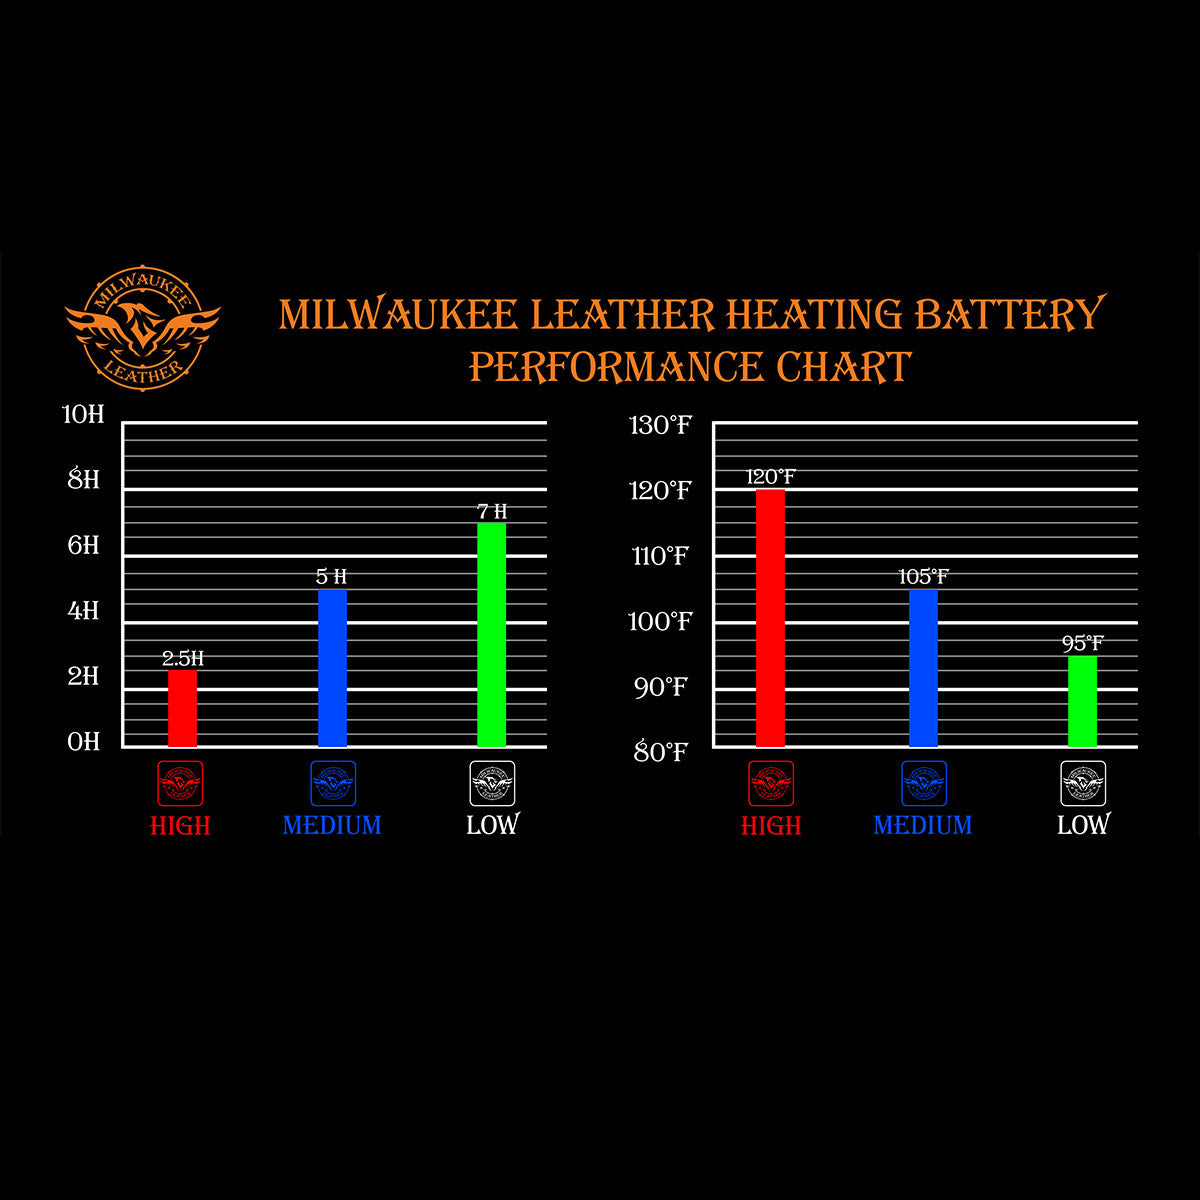 Nexgen Heat MPM1714SET Men's Grey Heated Hoodies - Front Zipper Textile Heated Jacket for Winter w/Battery Pack